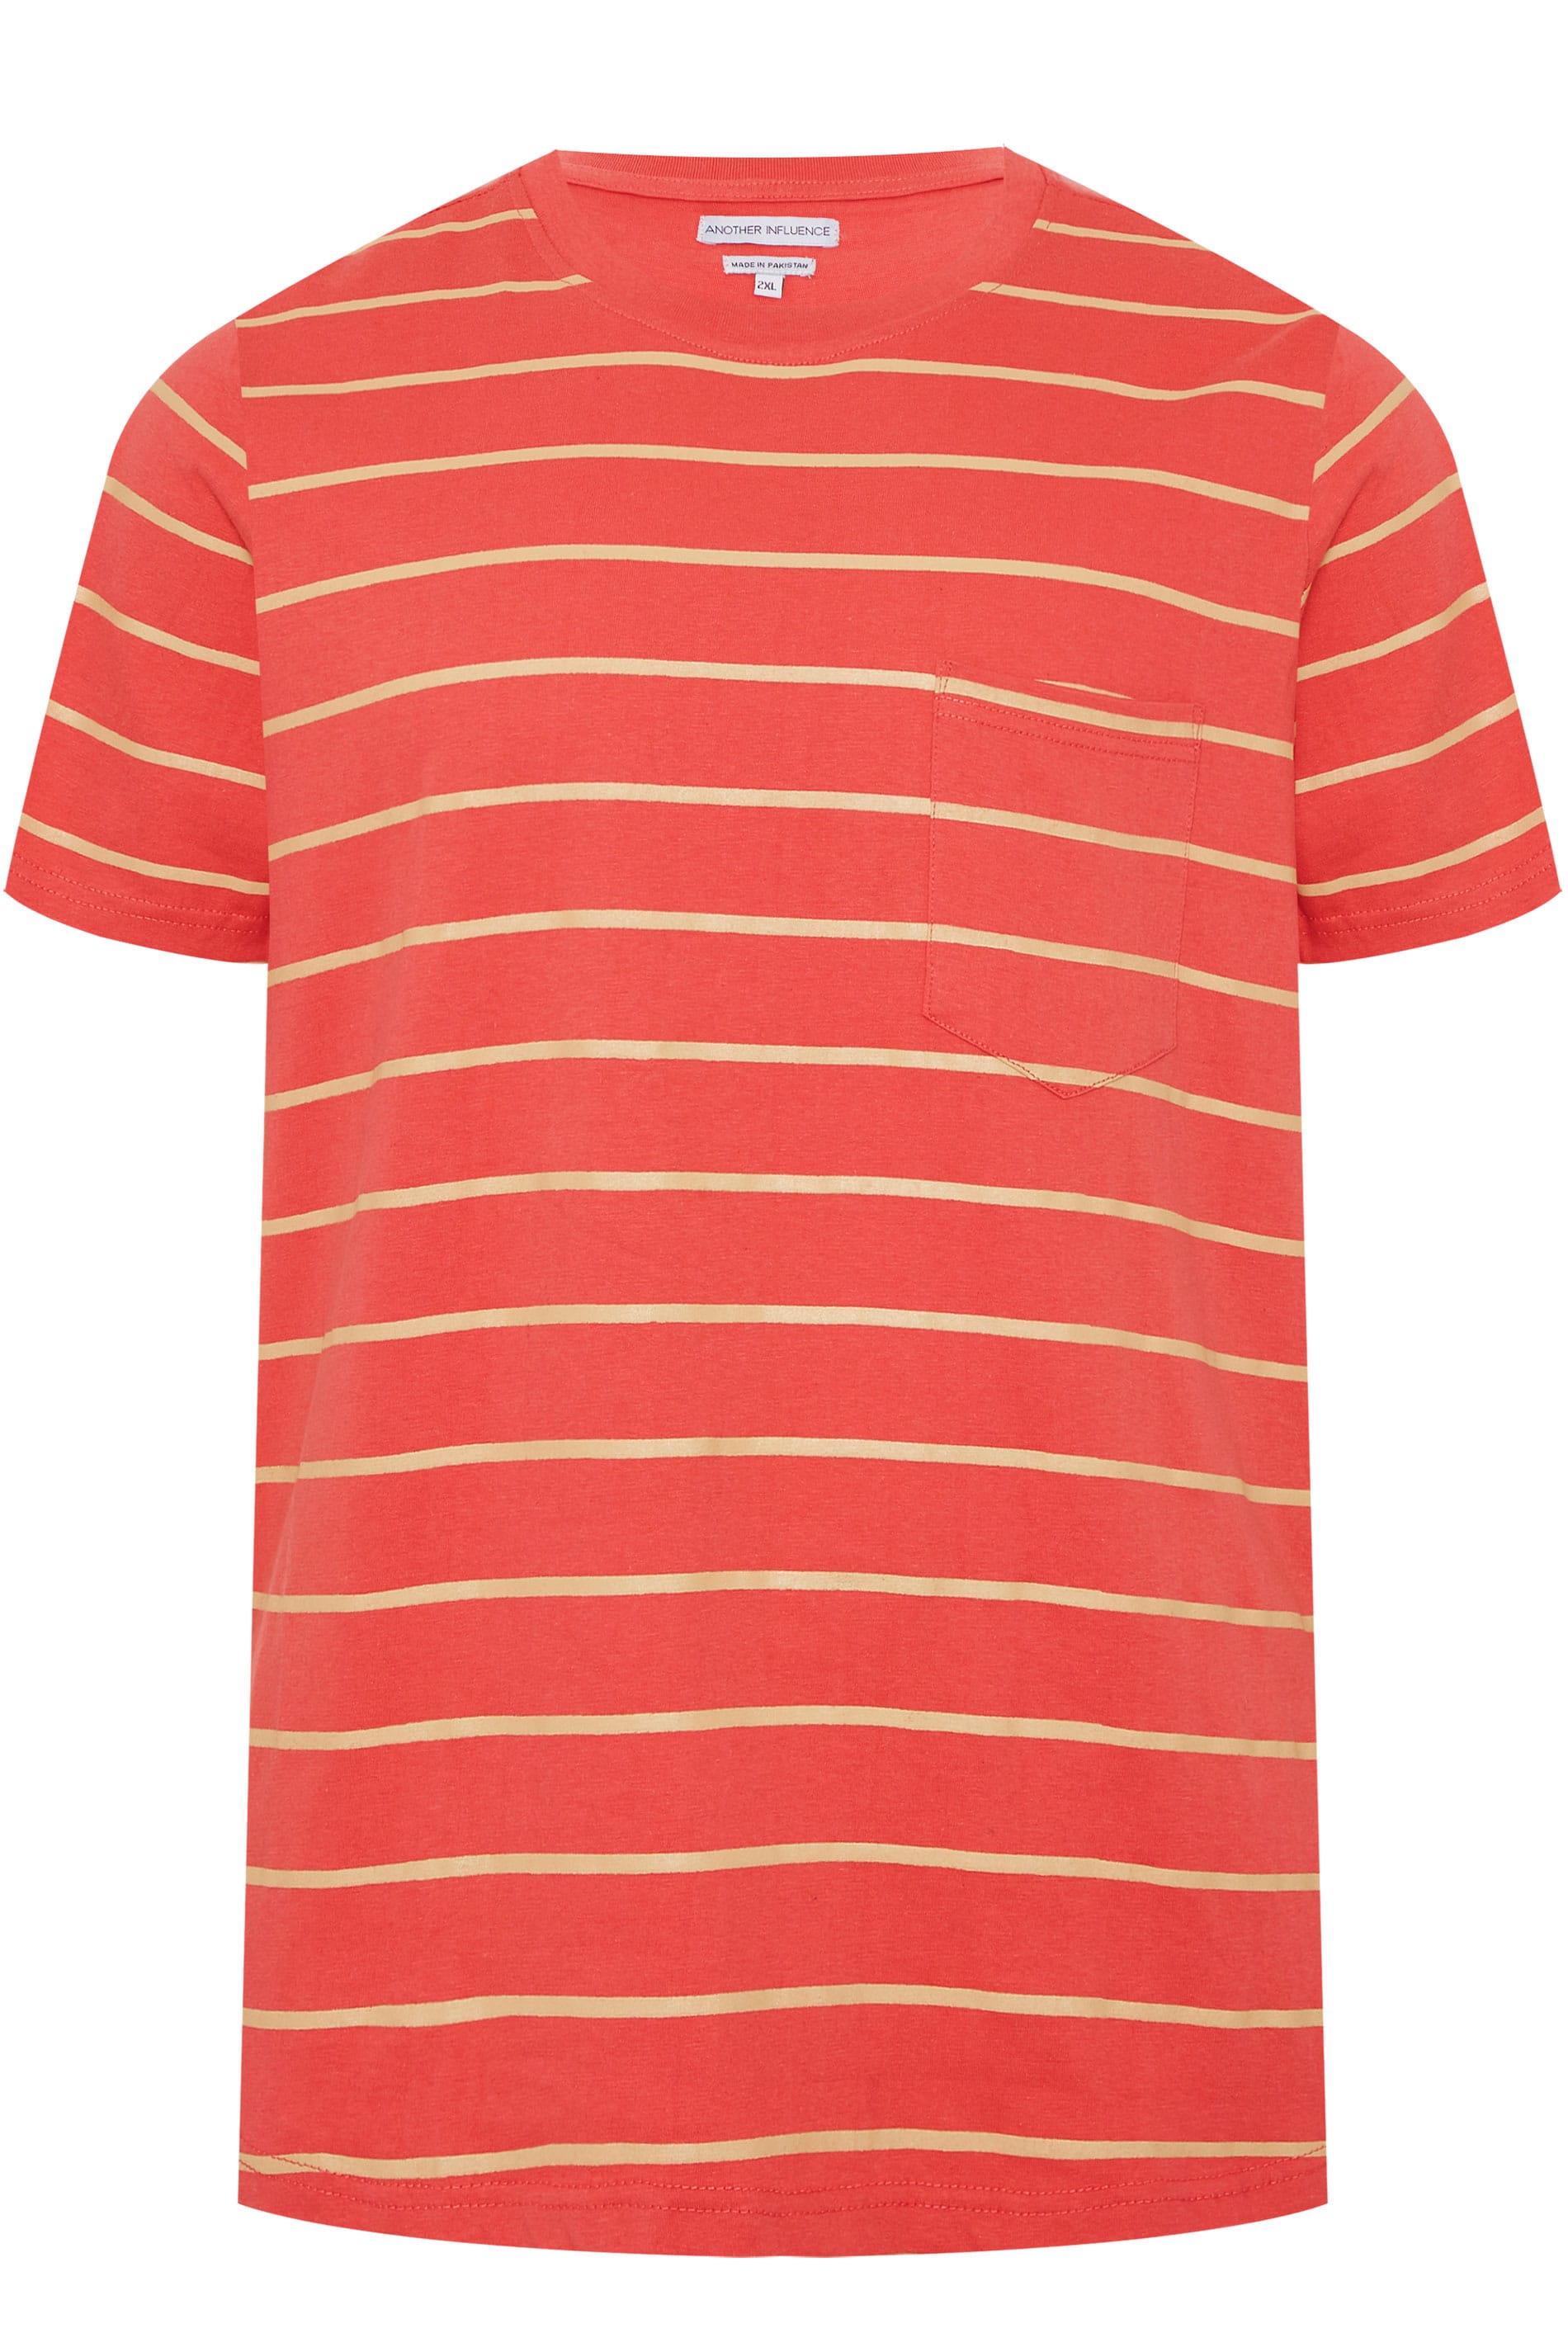 ANOTHER INFLUENCE Orange Striped T-Shirt | BadRhino